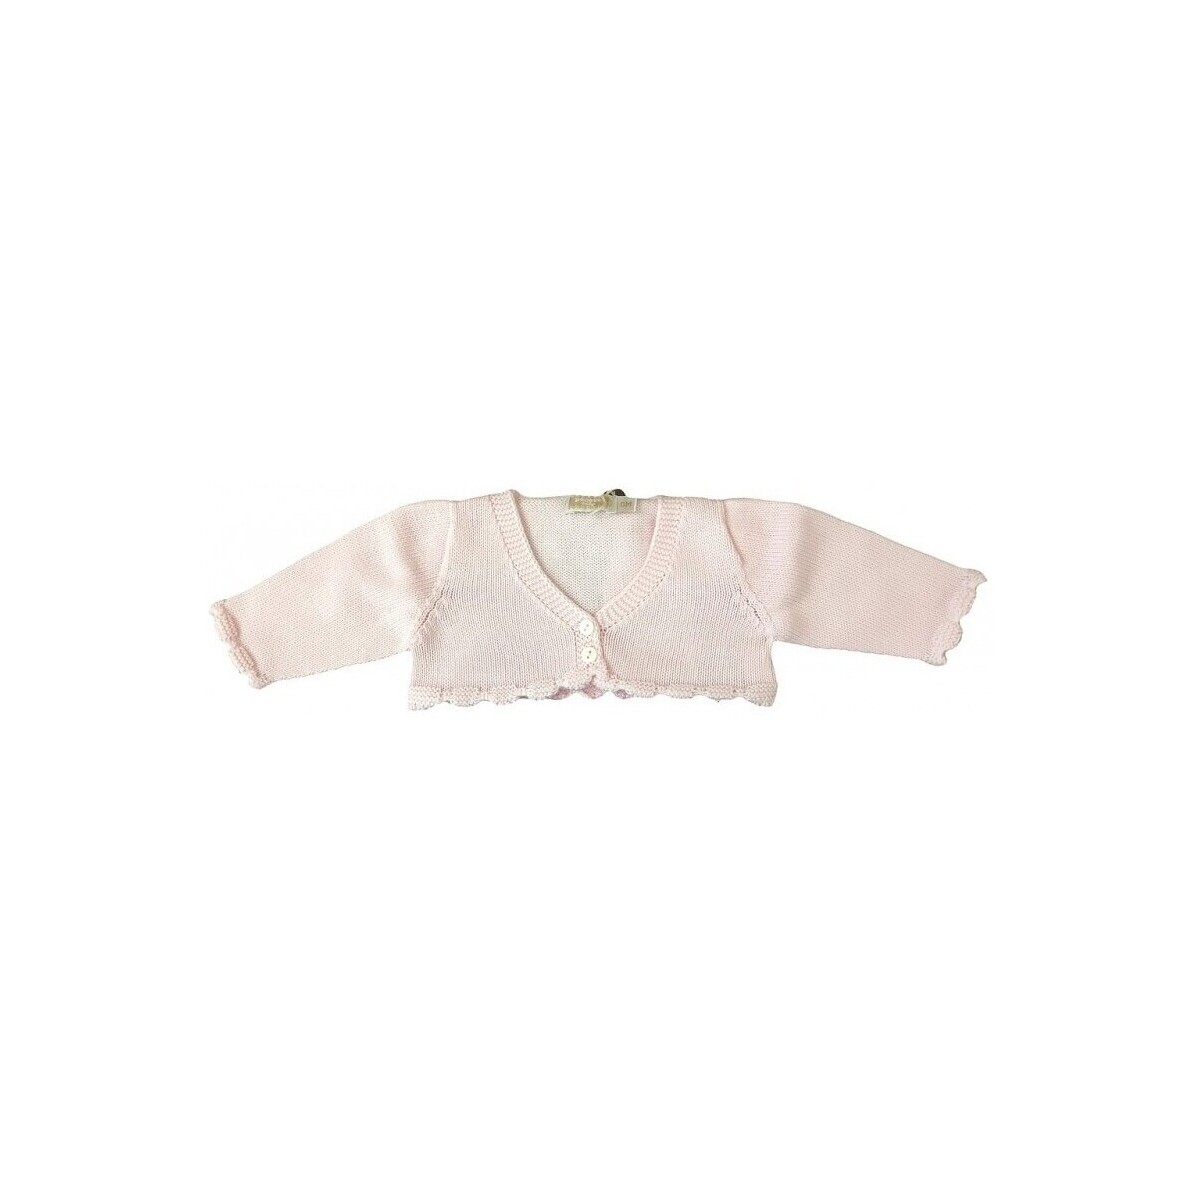 Oblačila Plašči P. Baby 23815-1 Rožnata